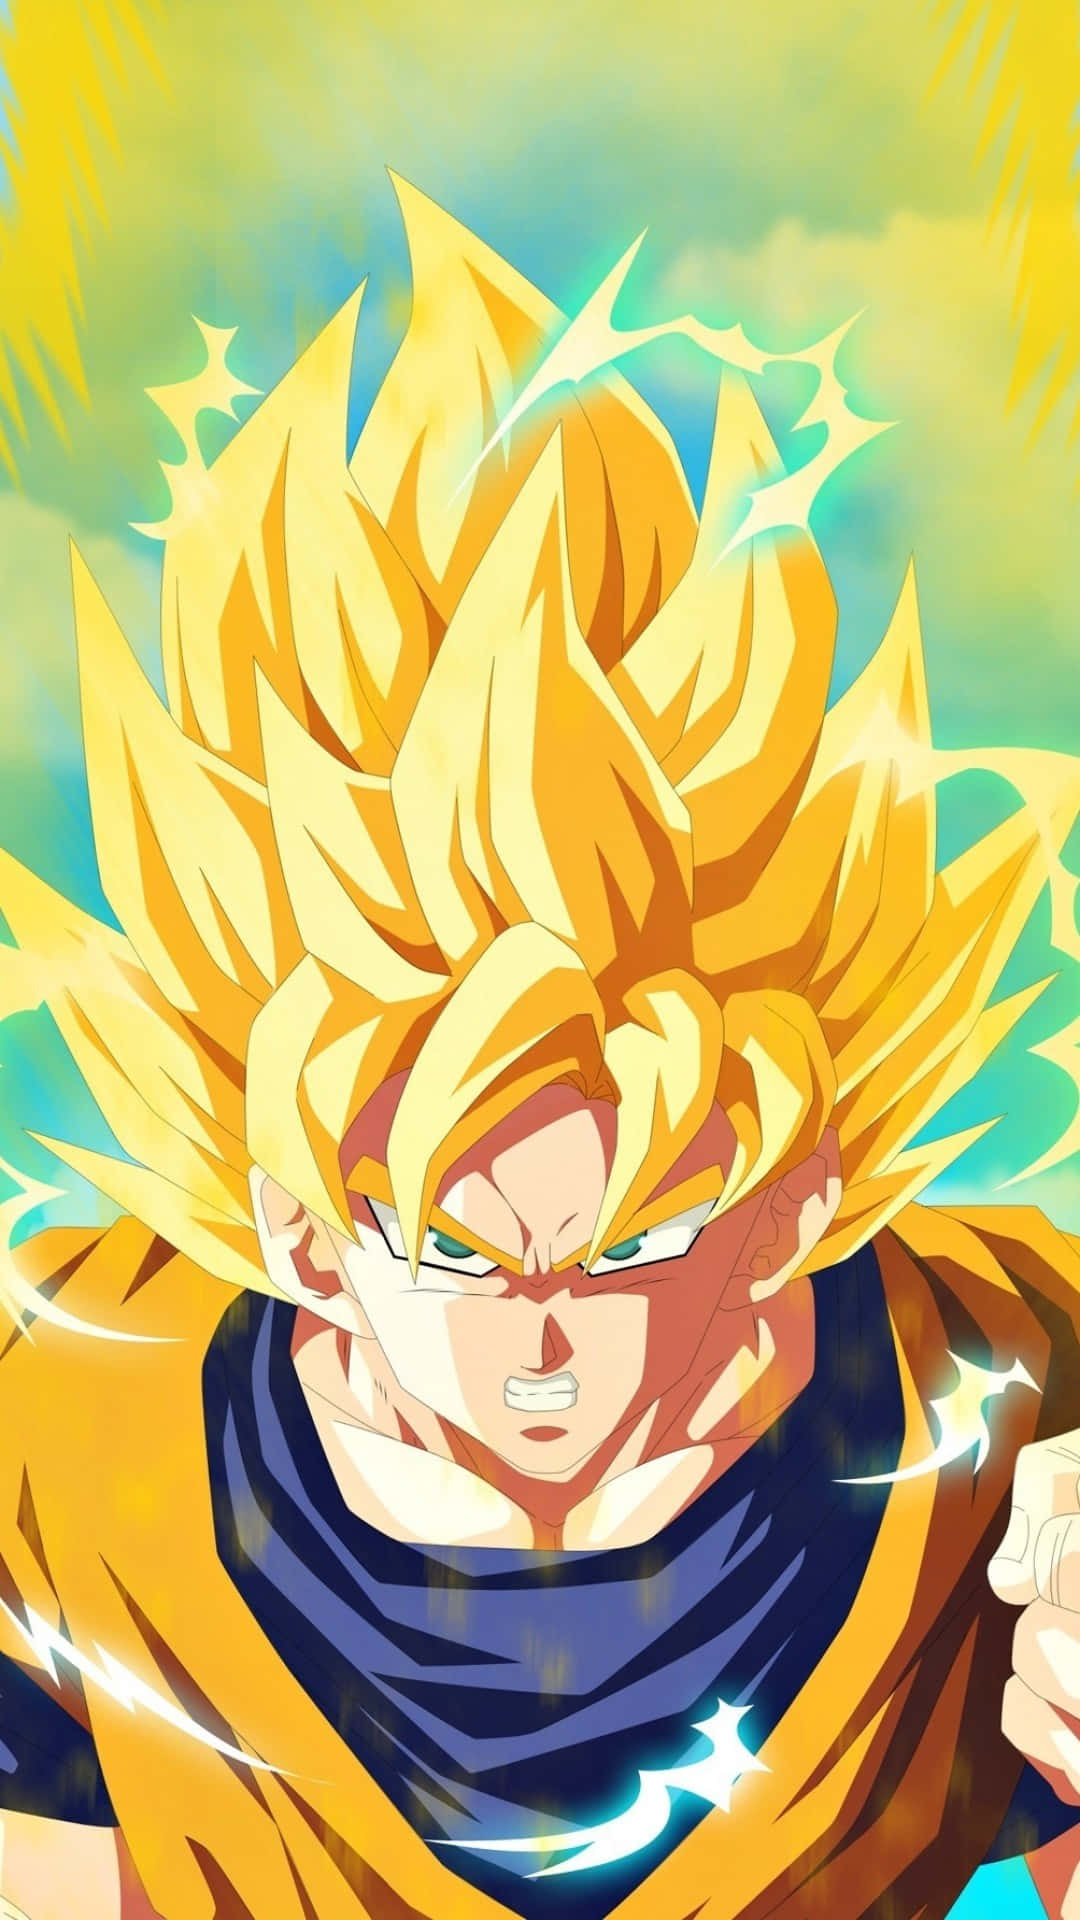 Bildvon Golden Yellow Goku Aus Dragon Ball Z.